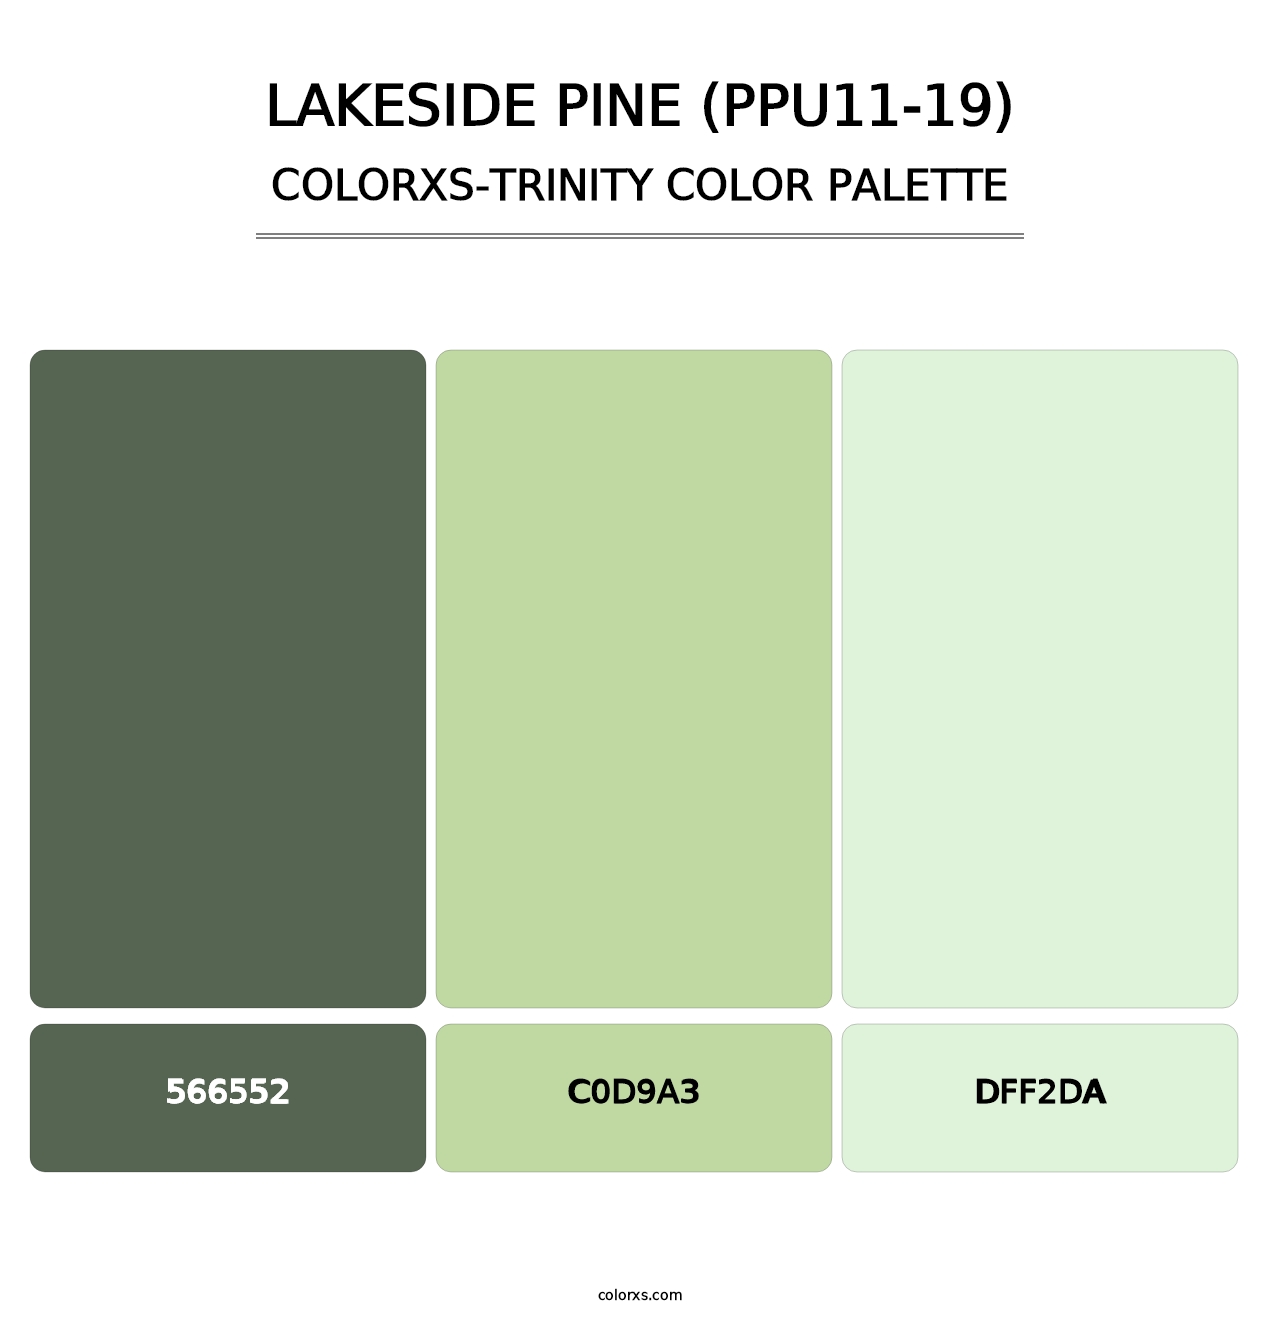 Lakeside Pine (PPU11-19) - Colorxs Trinity Palette